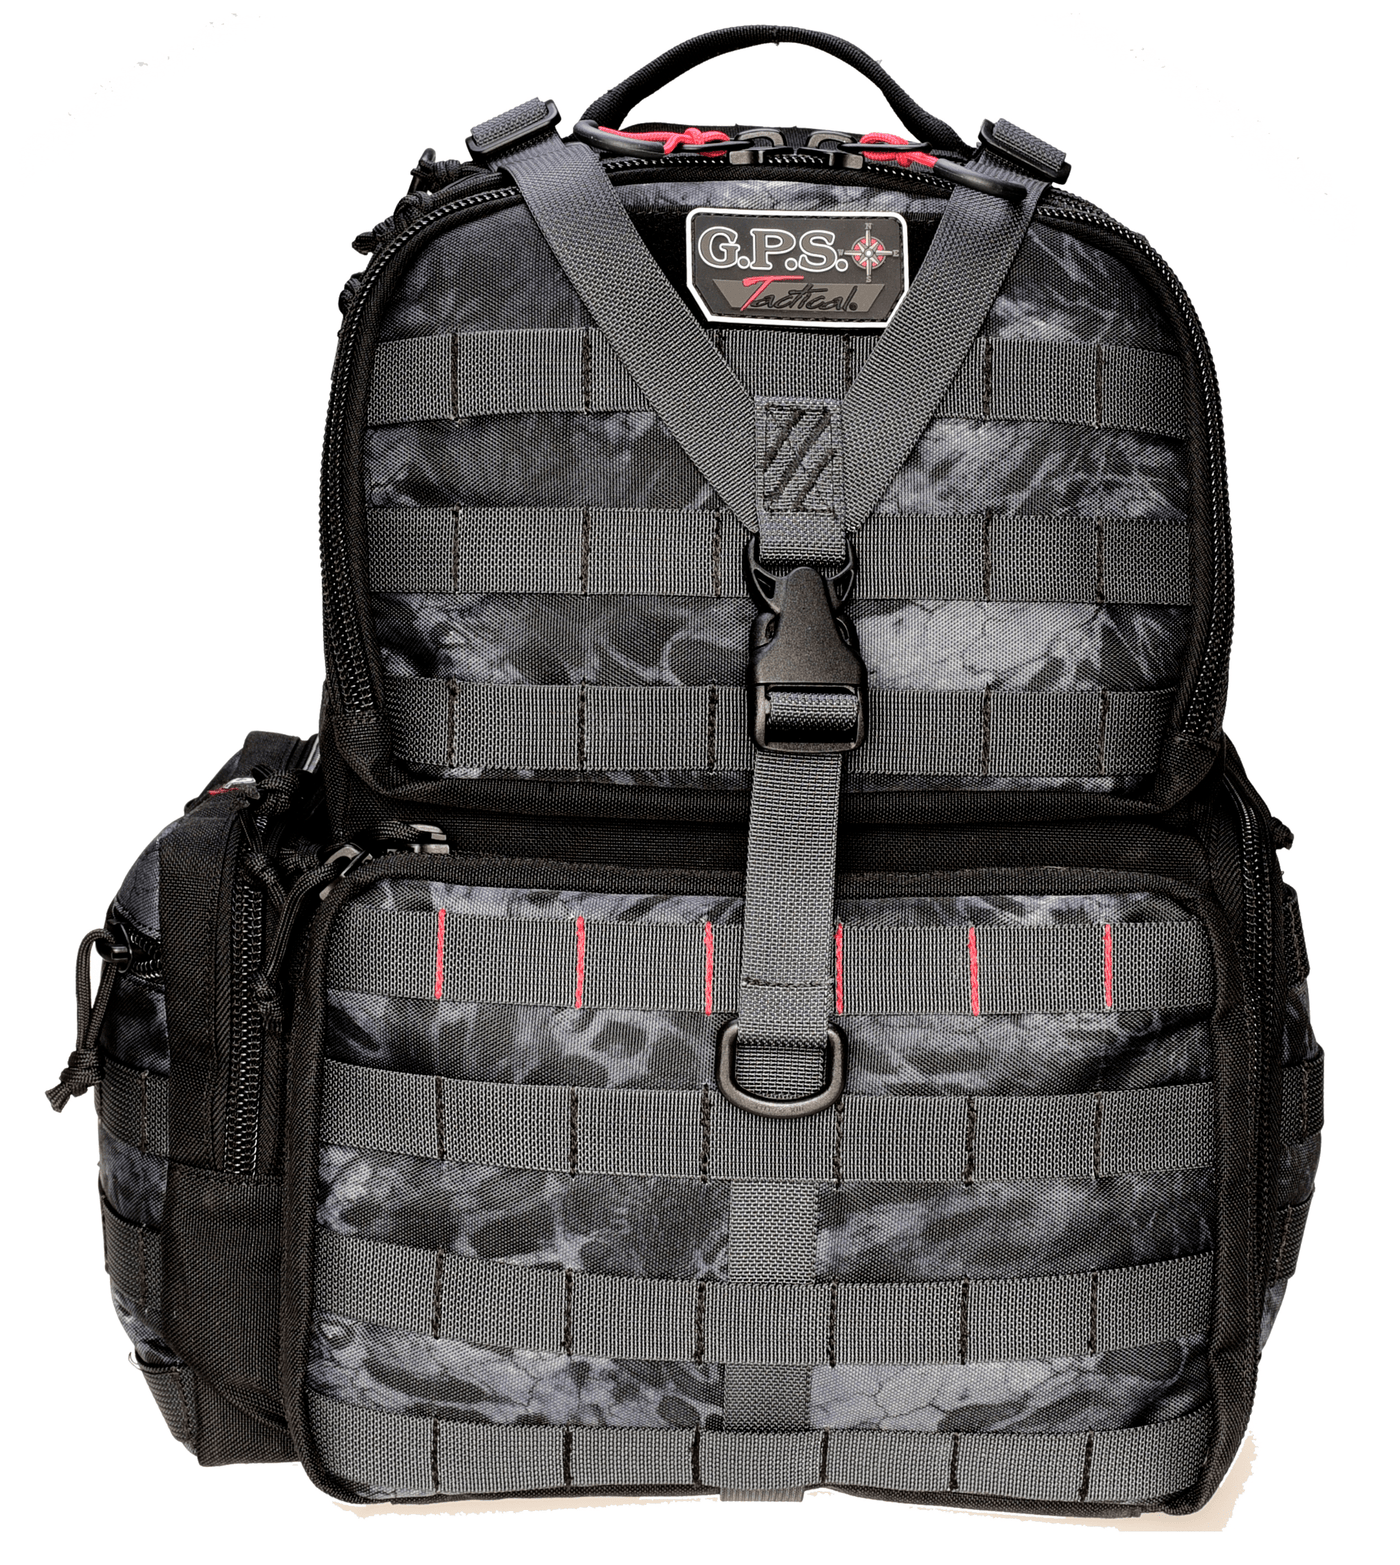 GPS Gps Tactical Range Backpack - W/waist Strap Prym1 Blackout Backpacks